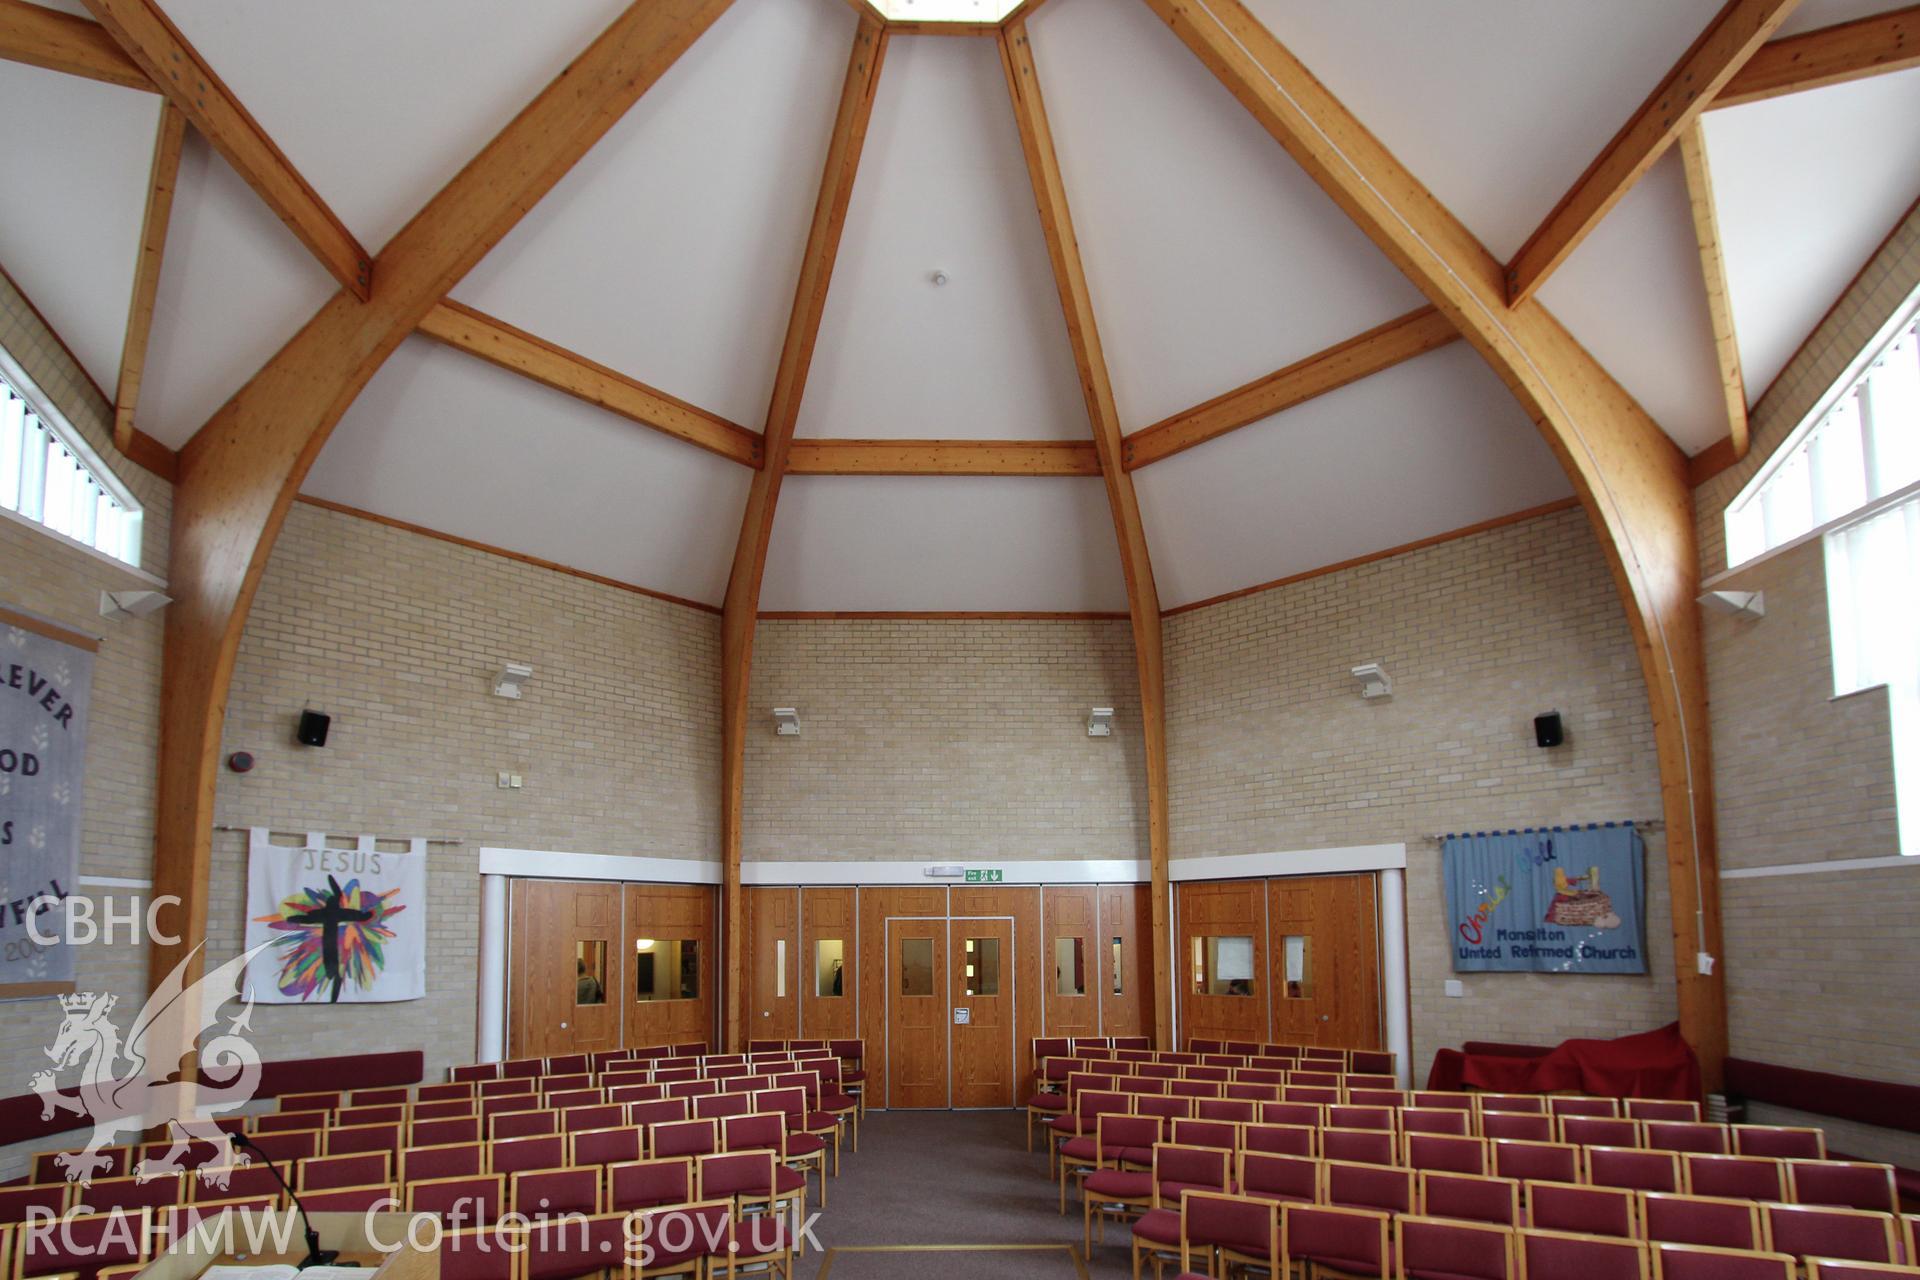 Manselton URC Chapel, Swansea, interior looking north-west